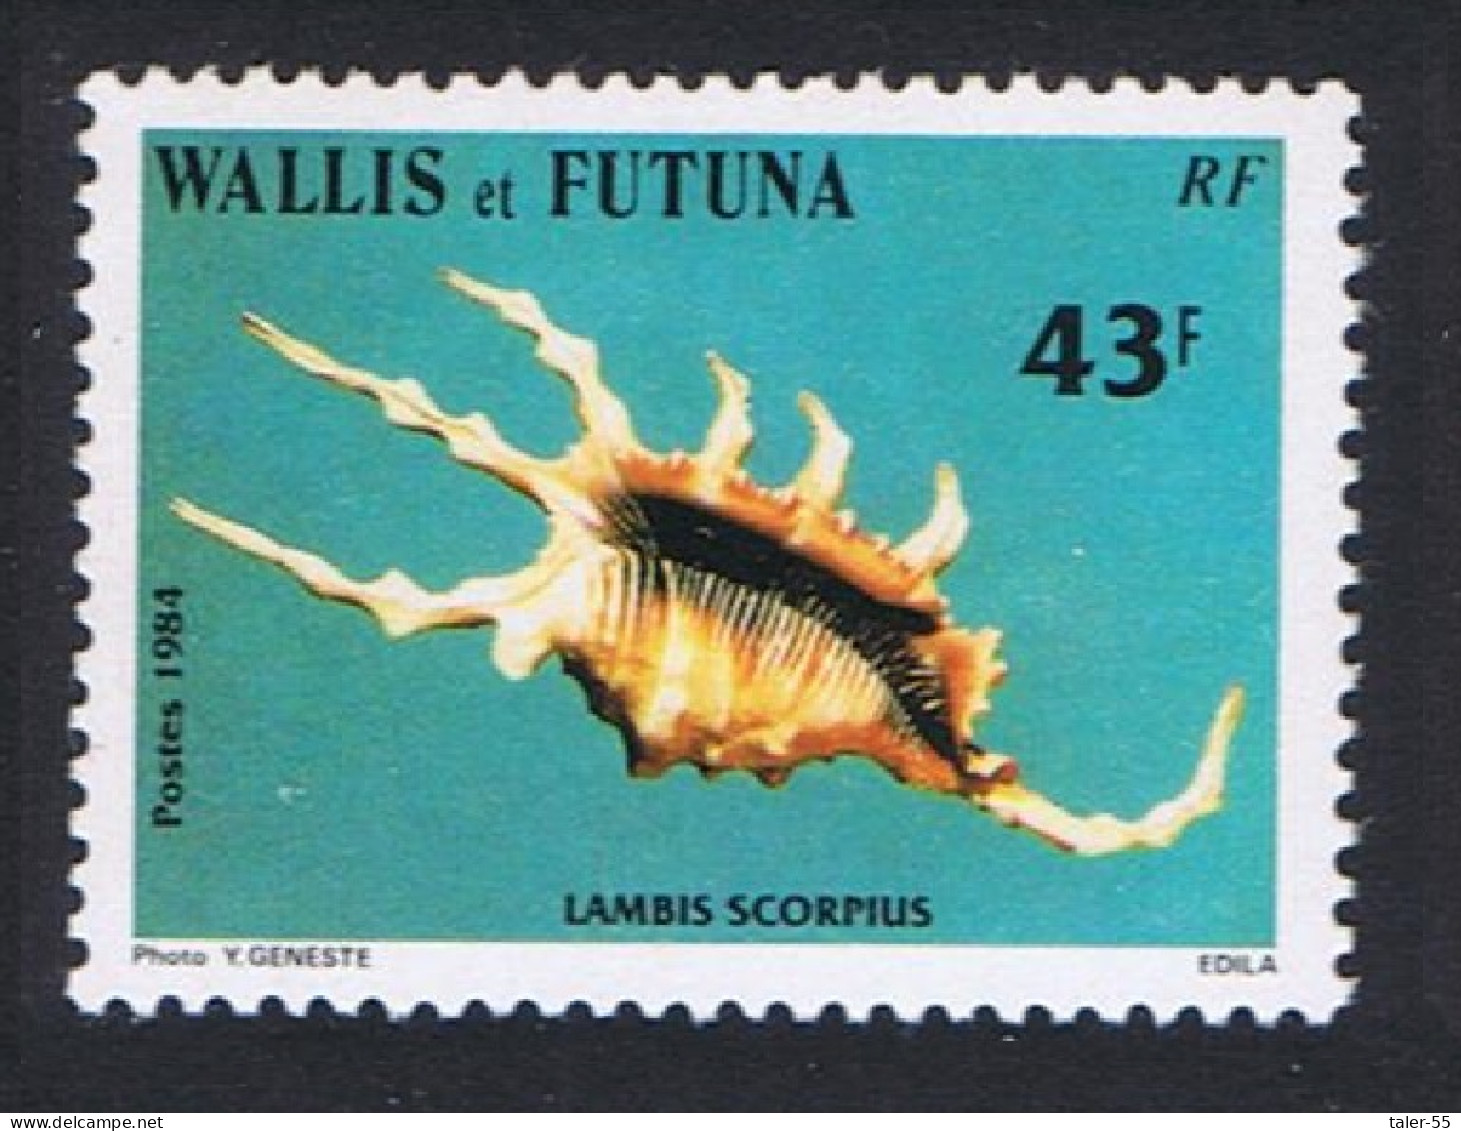 Wallis And Futuna Sea Shells Scorpion Conch 1984 MNH SG#443 Sc#310 - Unused Stamps